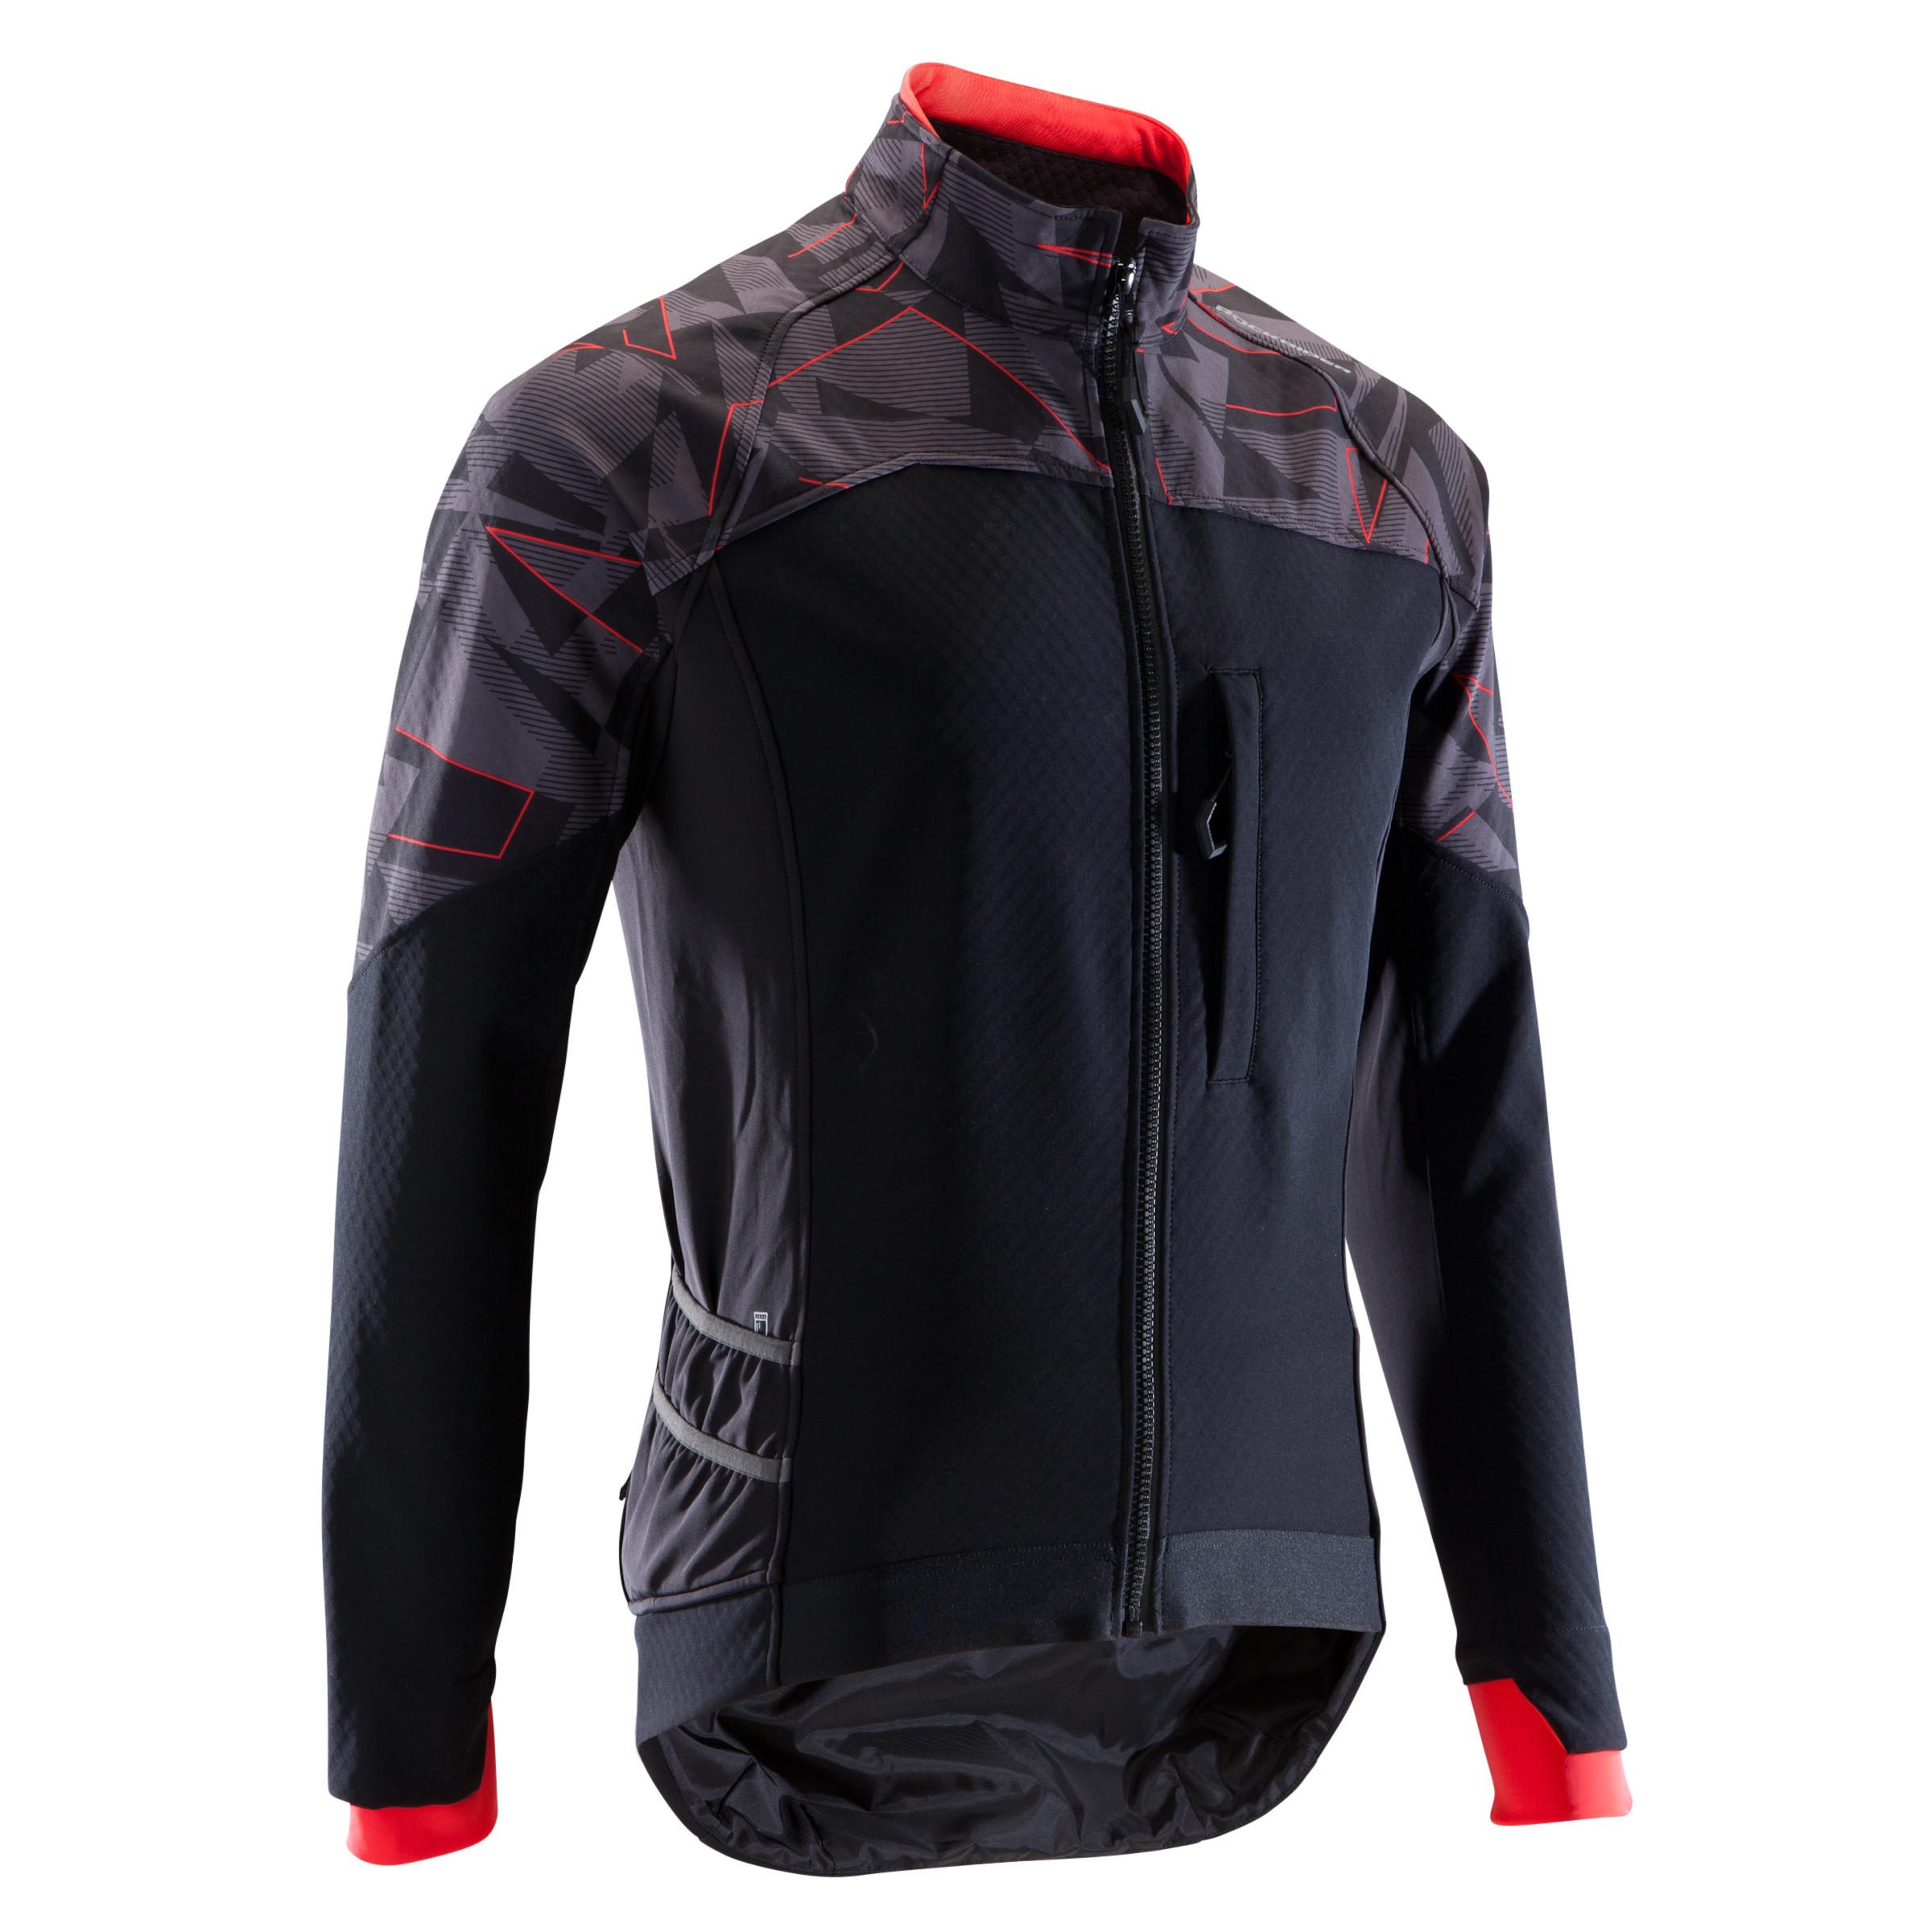 ROCKRIDER ST500 Winter Softshell MTB Cycling Jacket - Black/Red